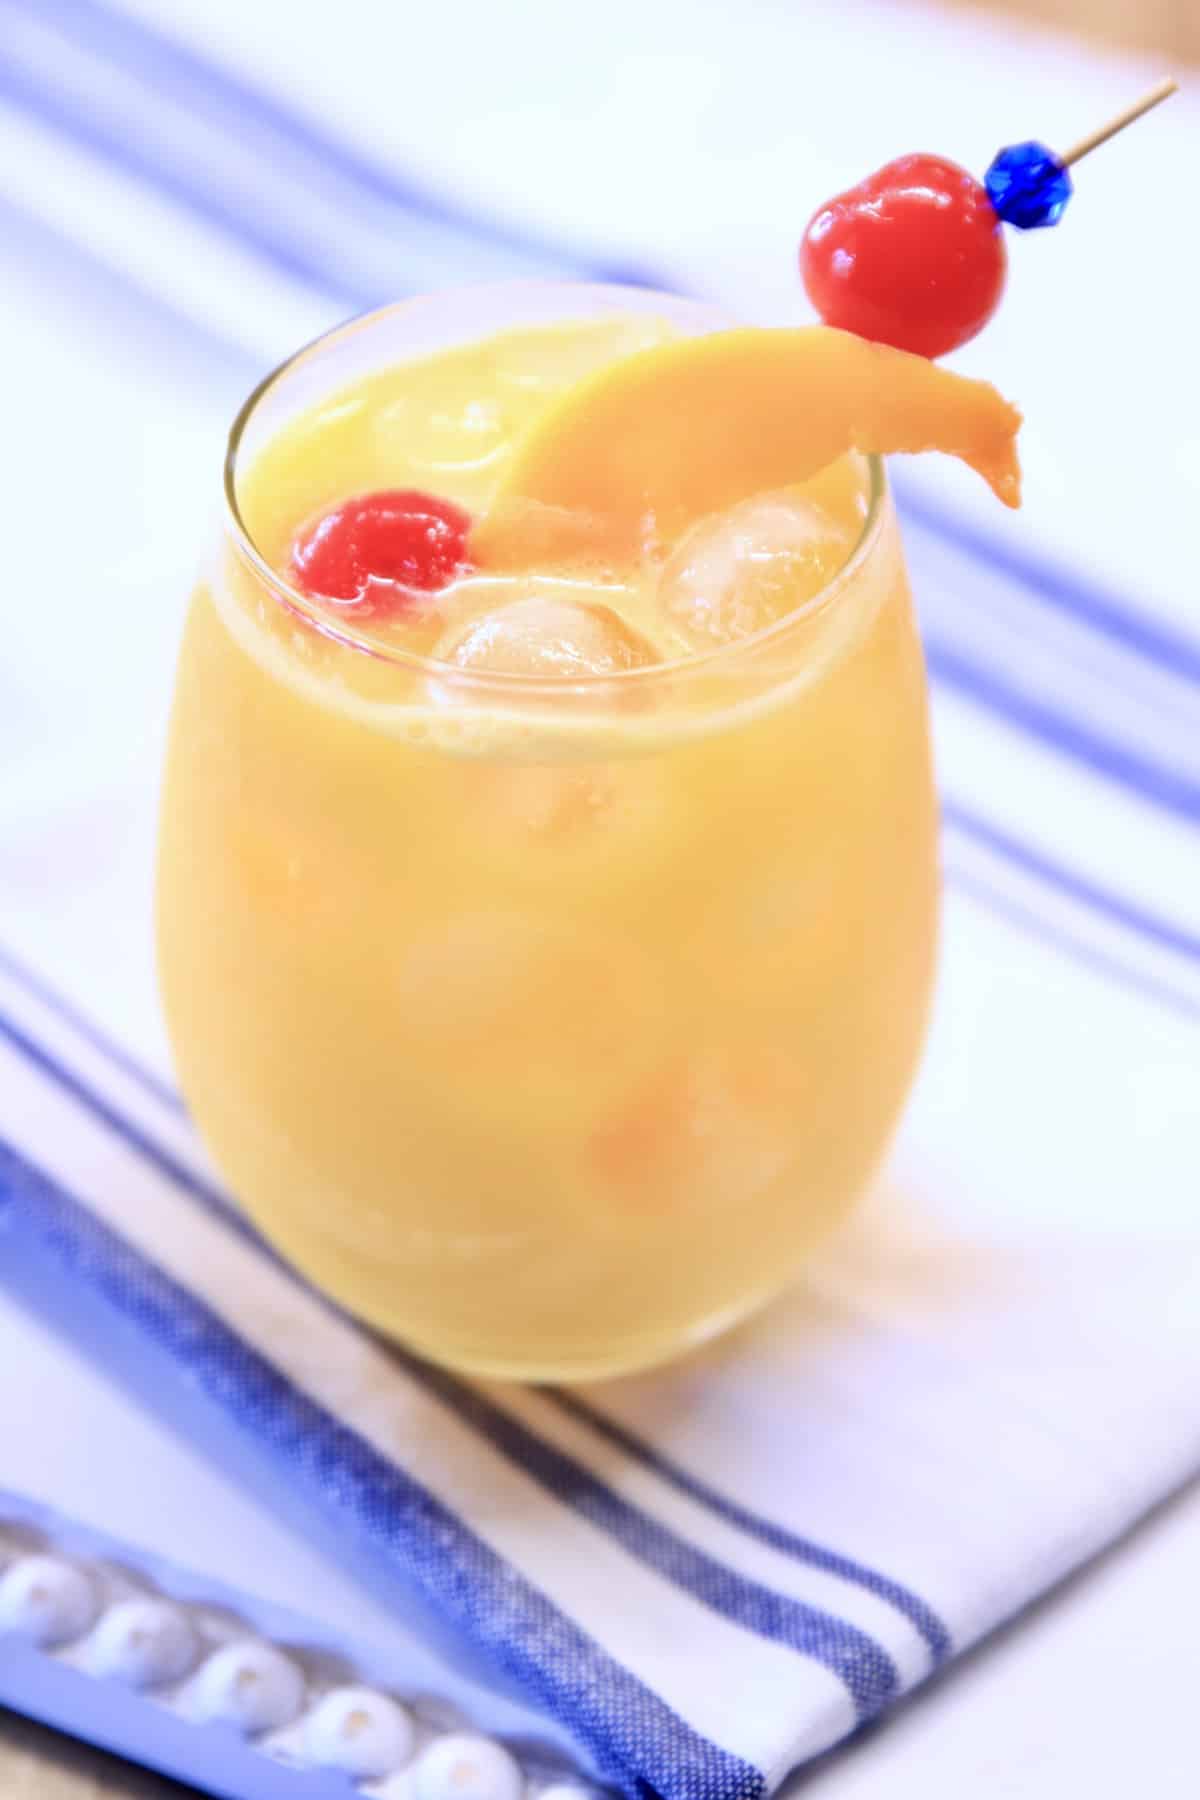 Stemless wine glass with orange mango cocktail.